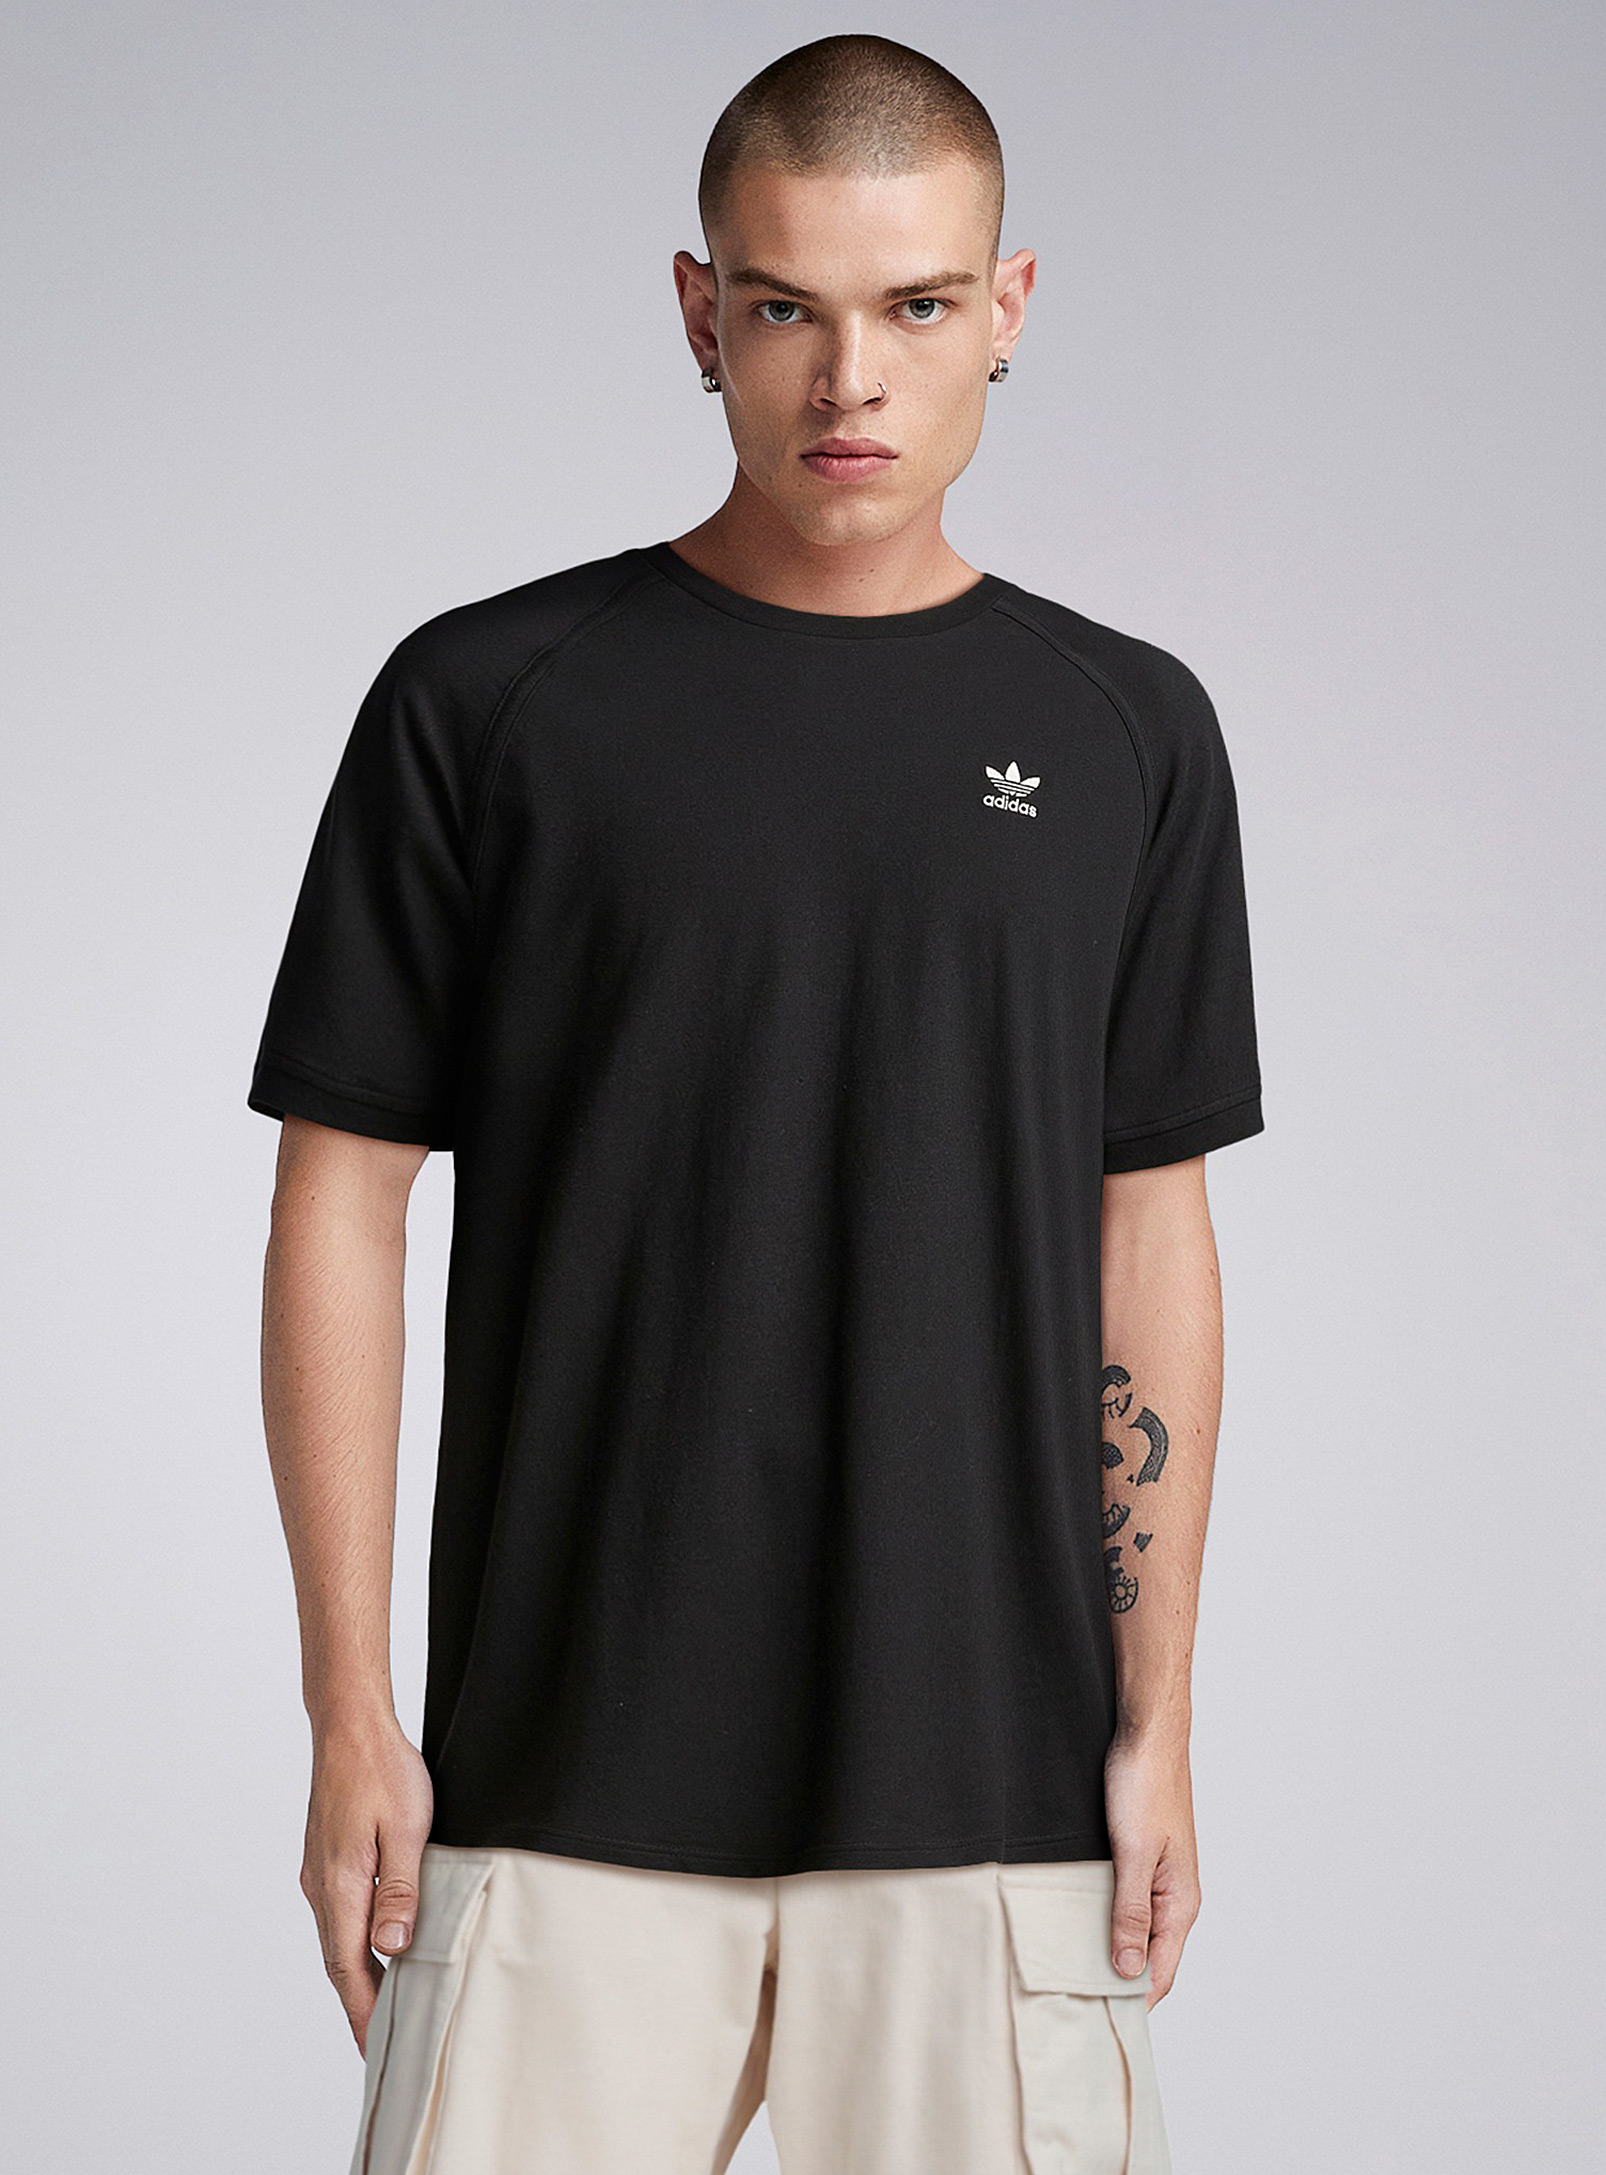 Adidas - Le t-shirt raglan logo Trefoil